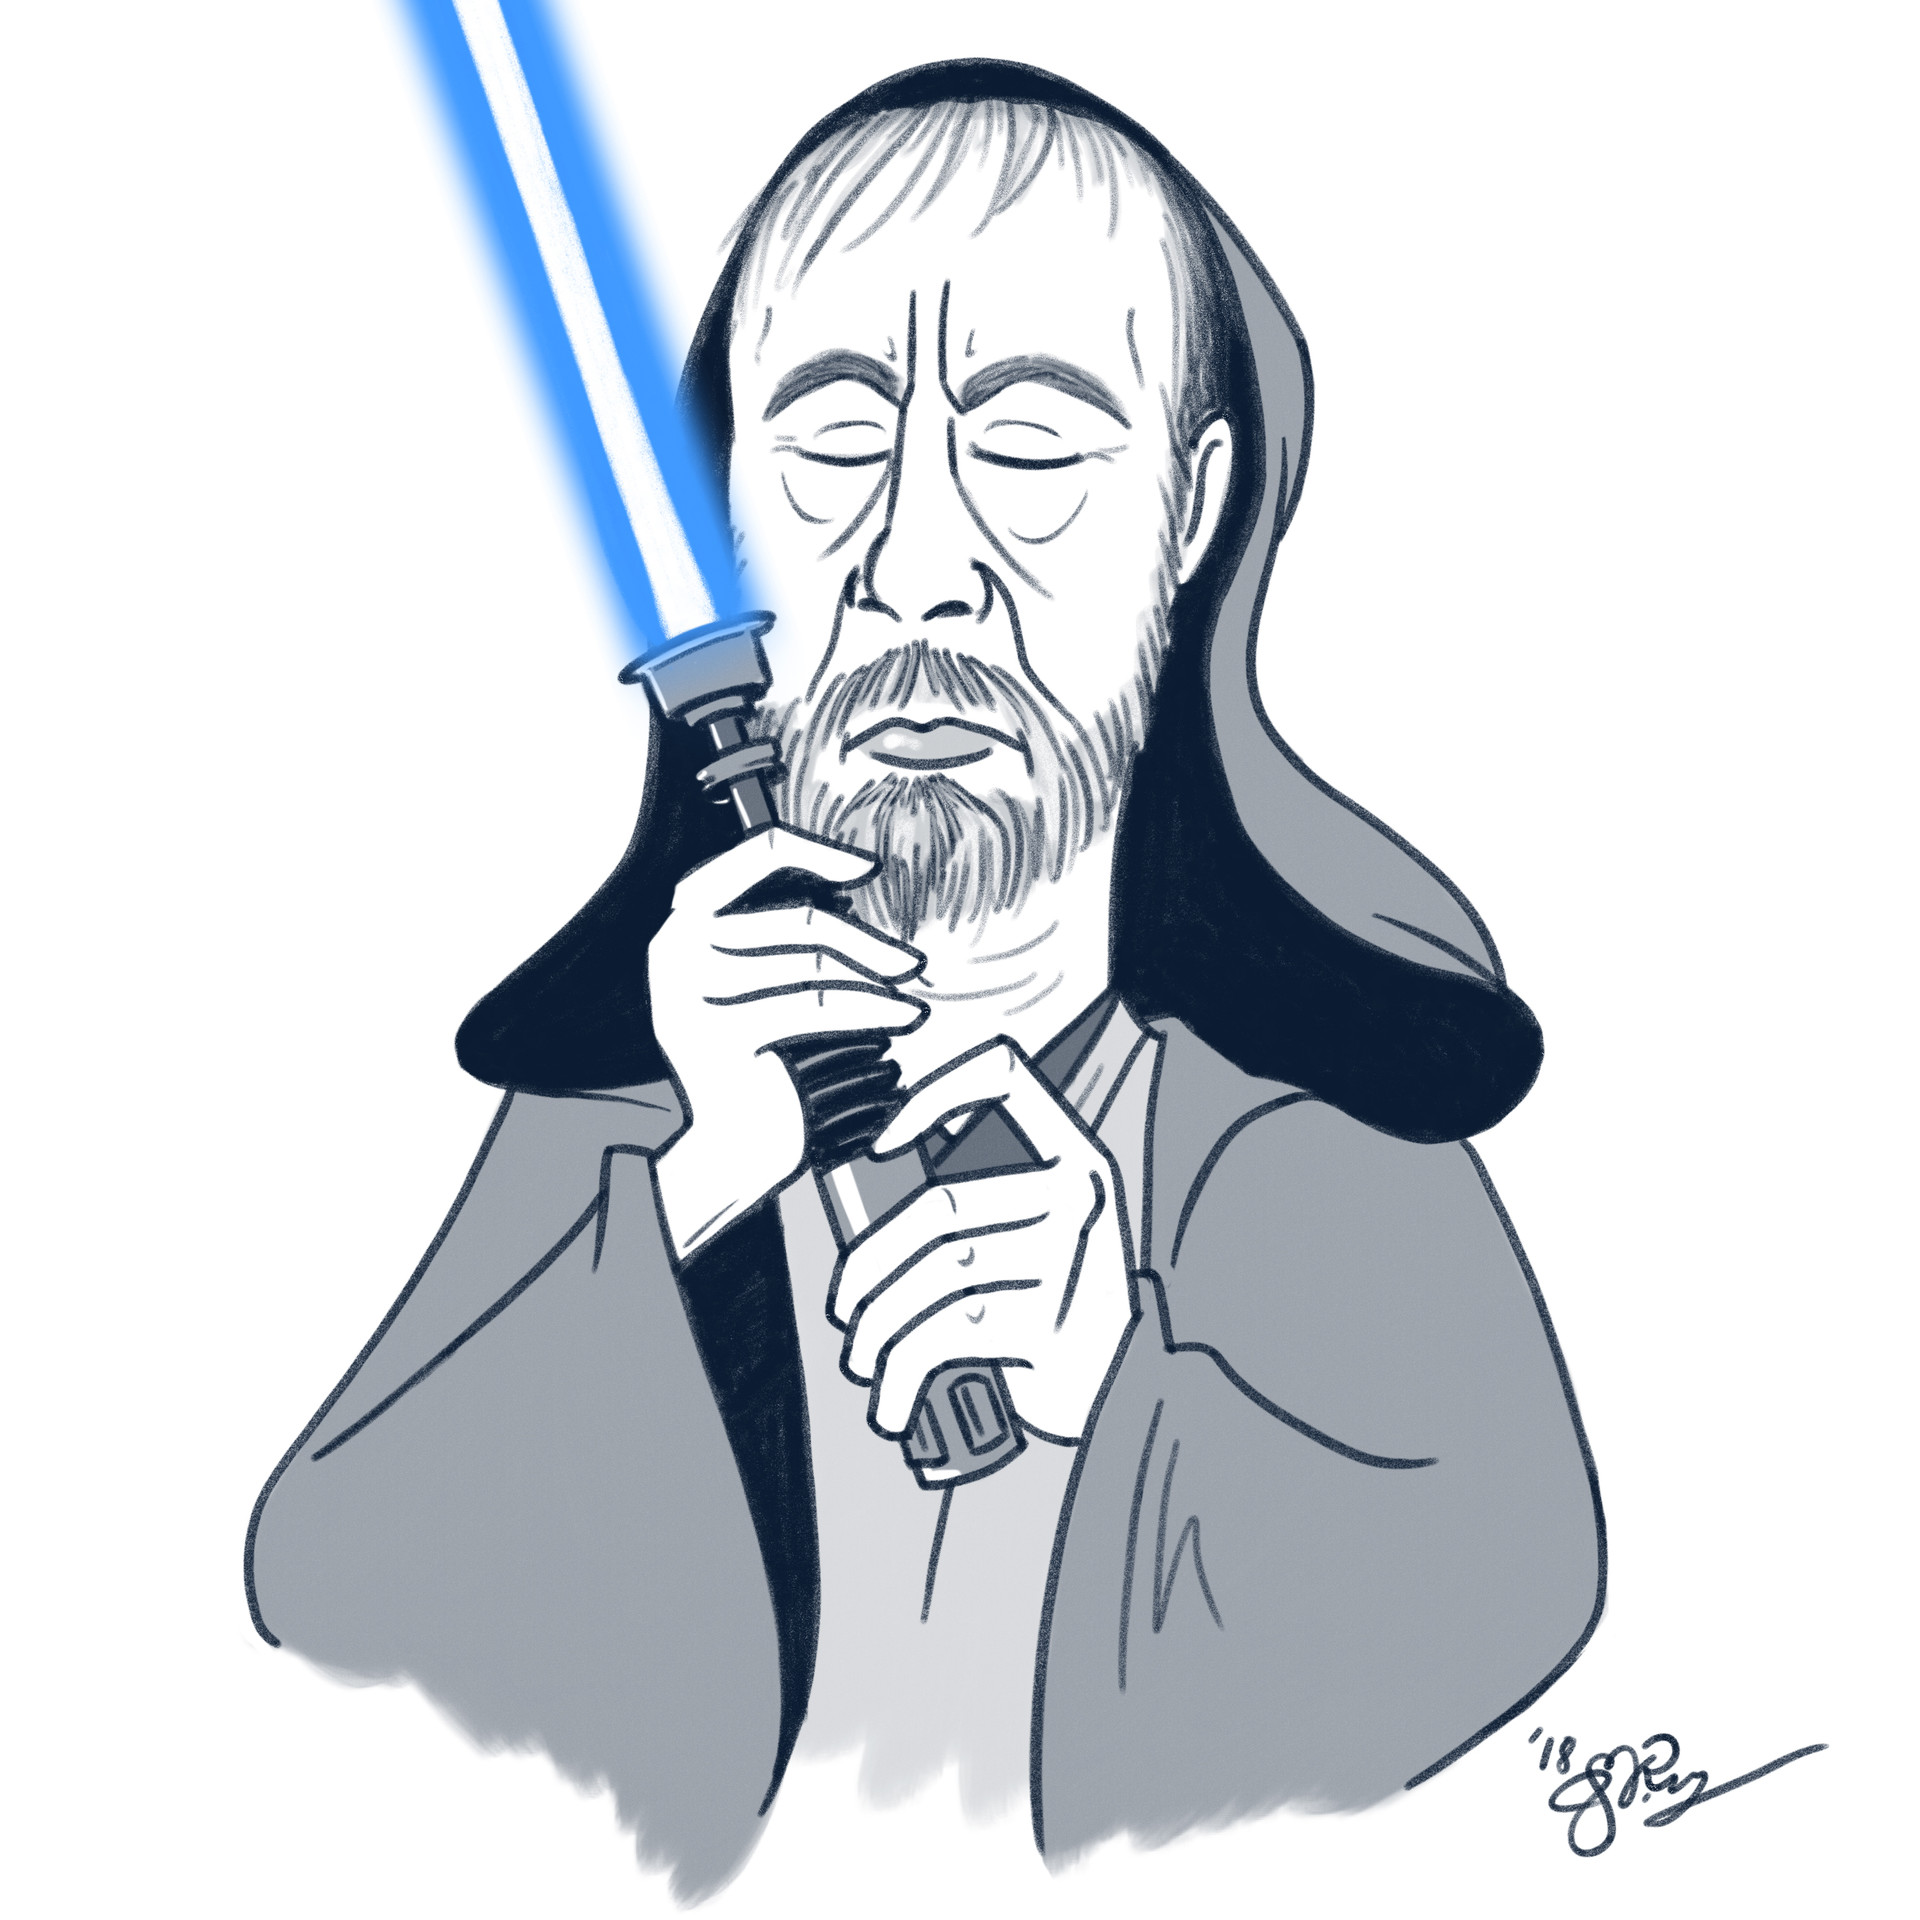 Obi Wan Kenobi Cartoon Drawing : Obi-wan Kenobi By Steveandersondesign ...